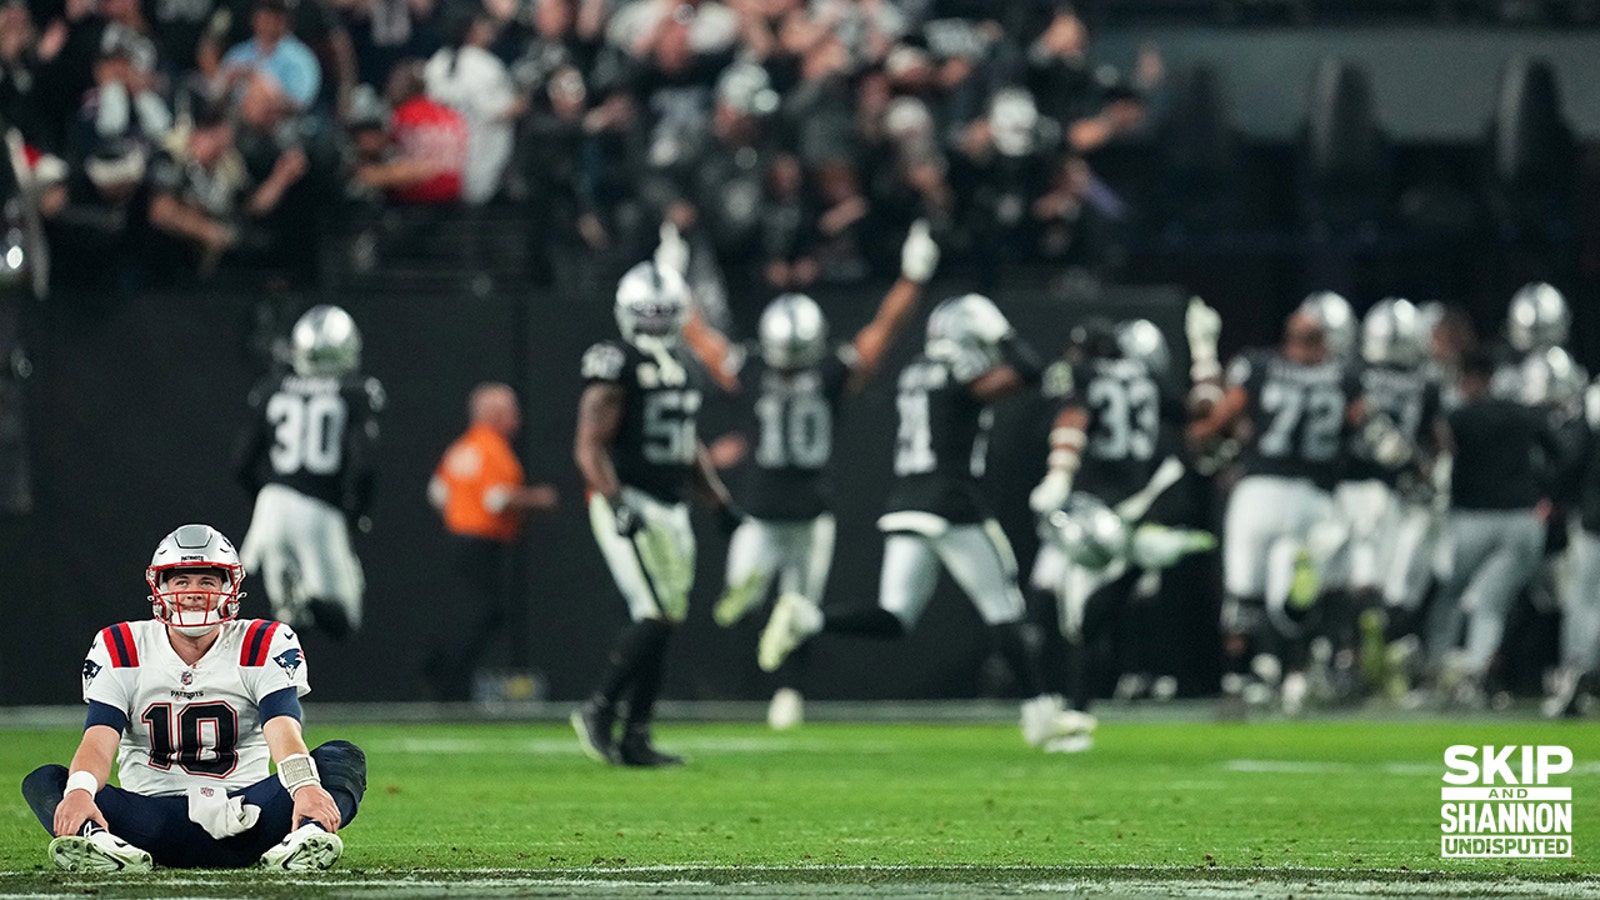 Raiders score miraculous game-winning TD on Patriots fumble